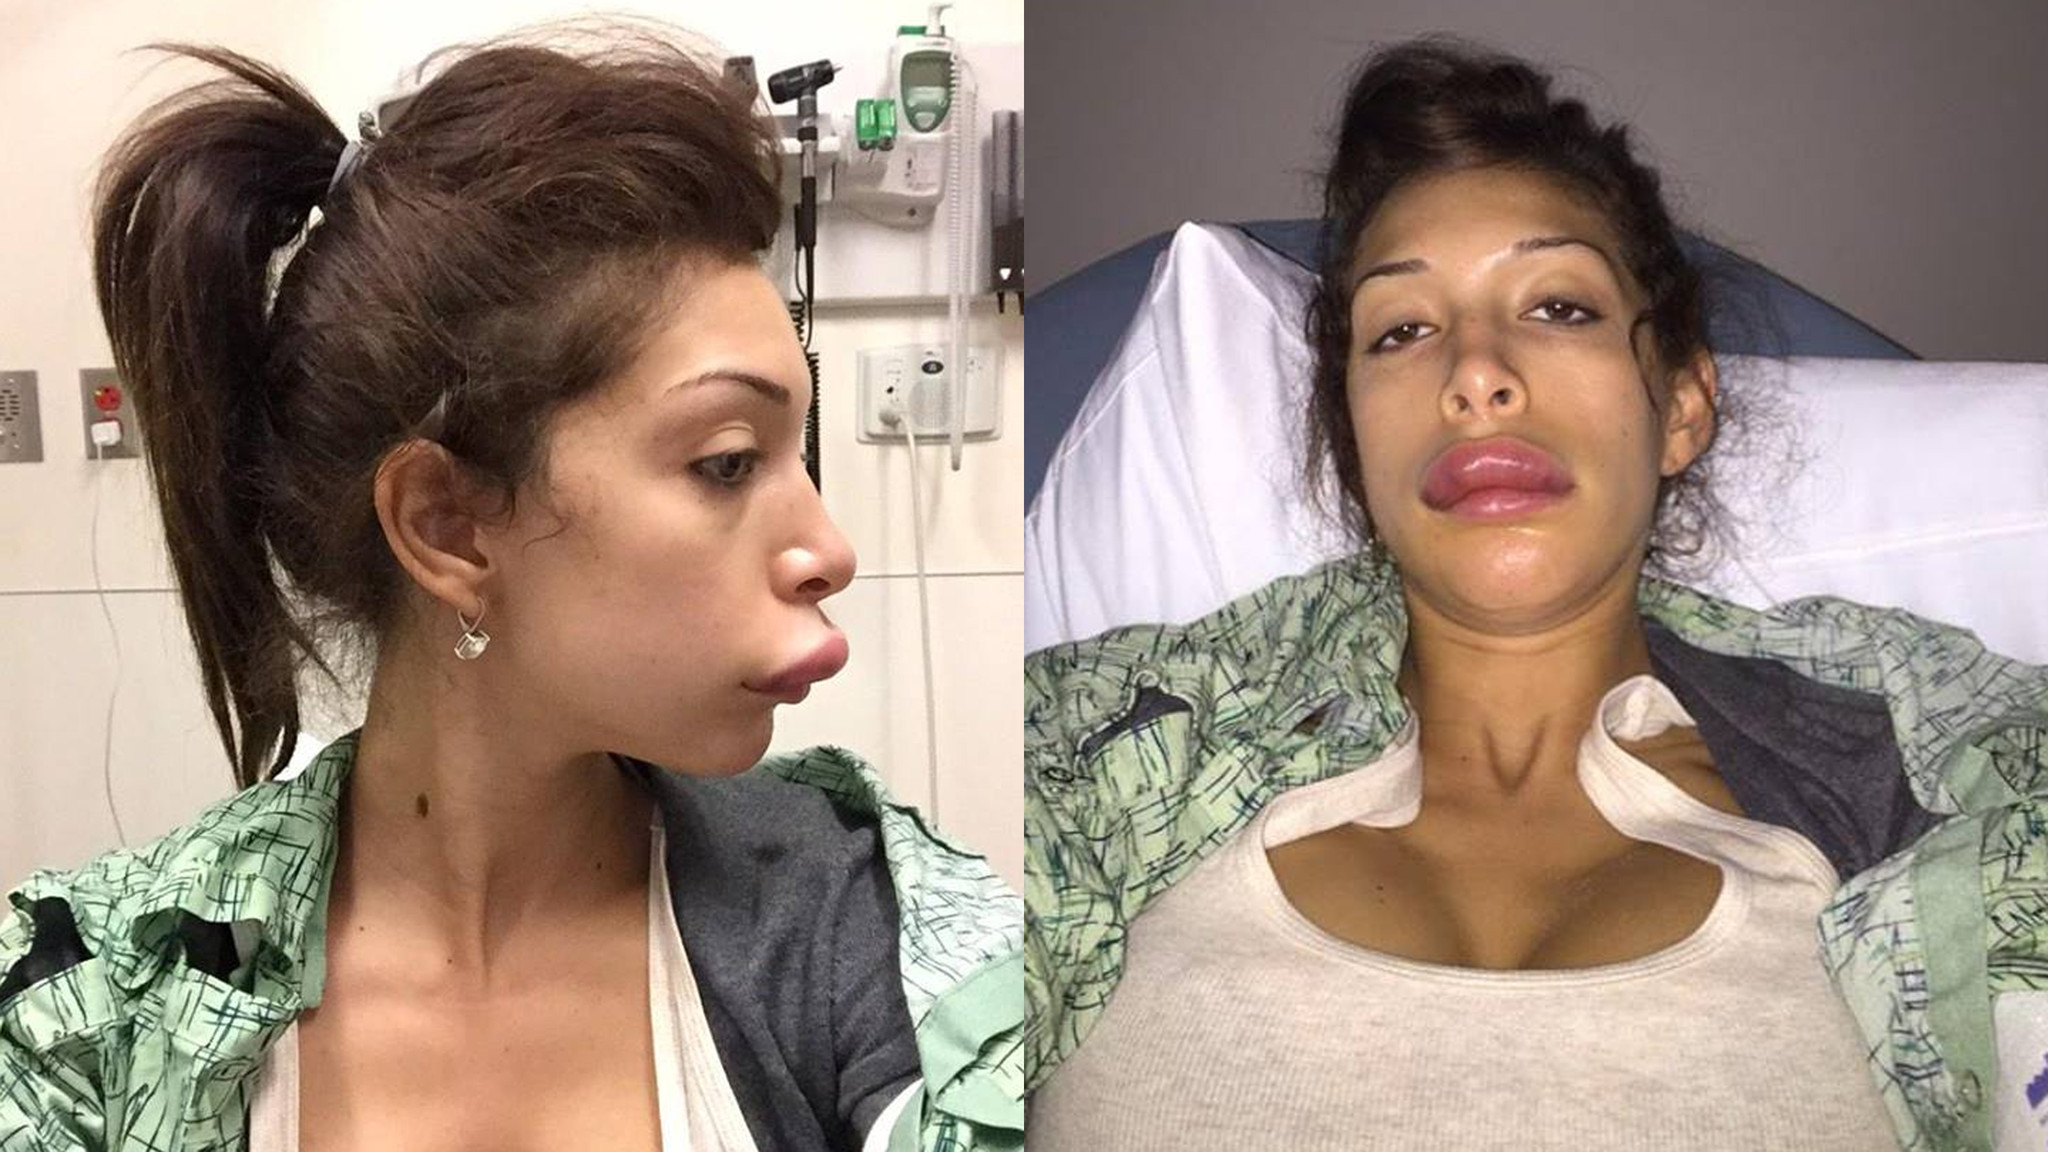 Pictures: Bad celebrity plastic surgery - Orlando Sentinel